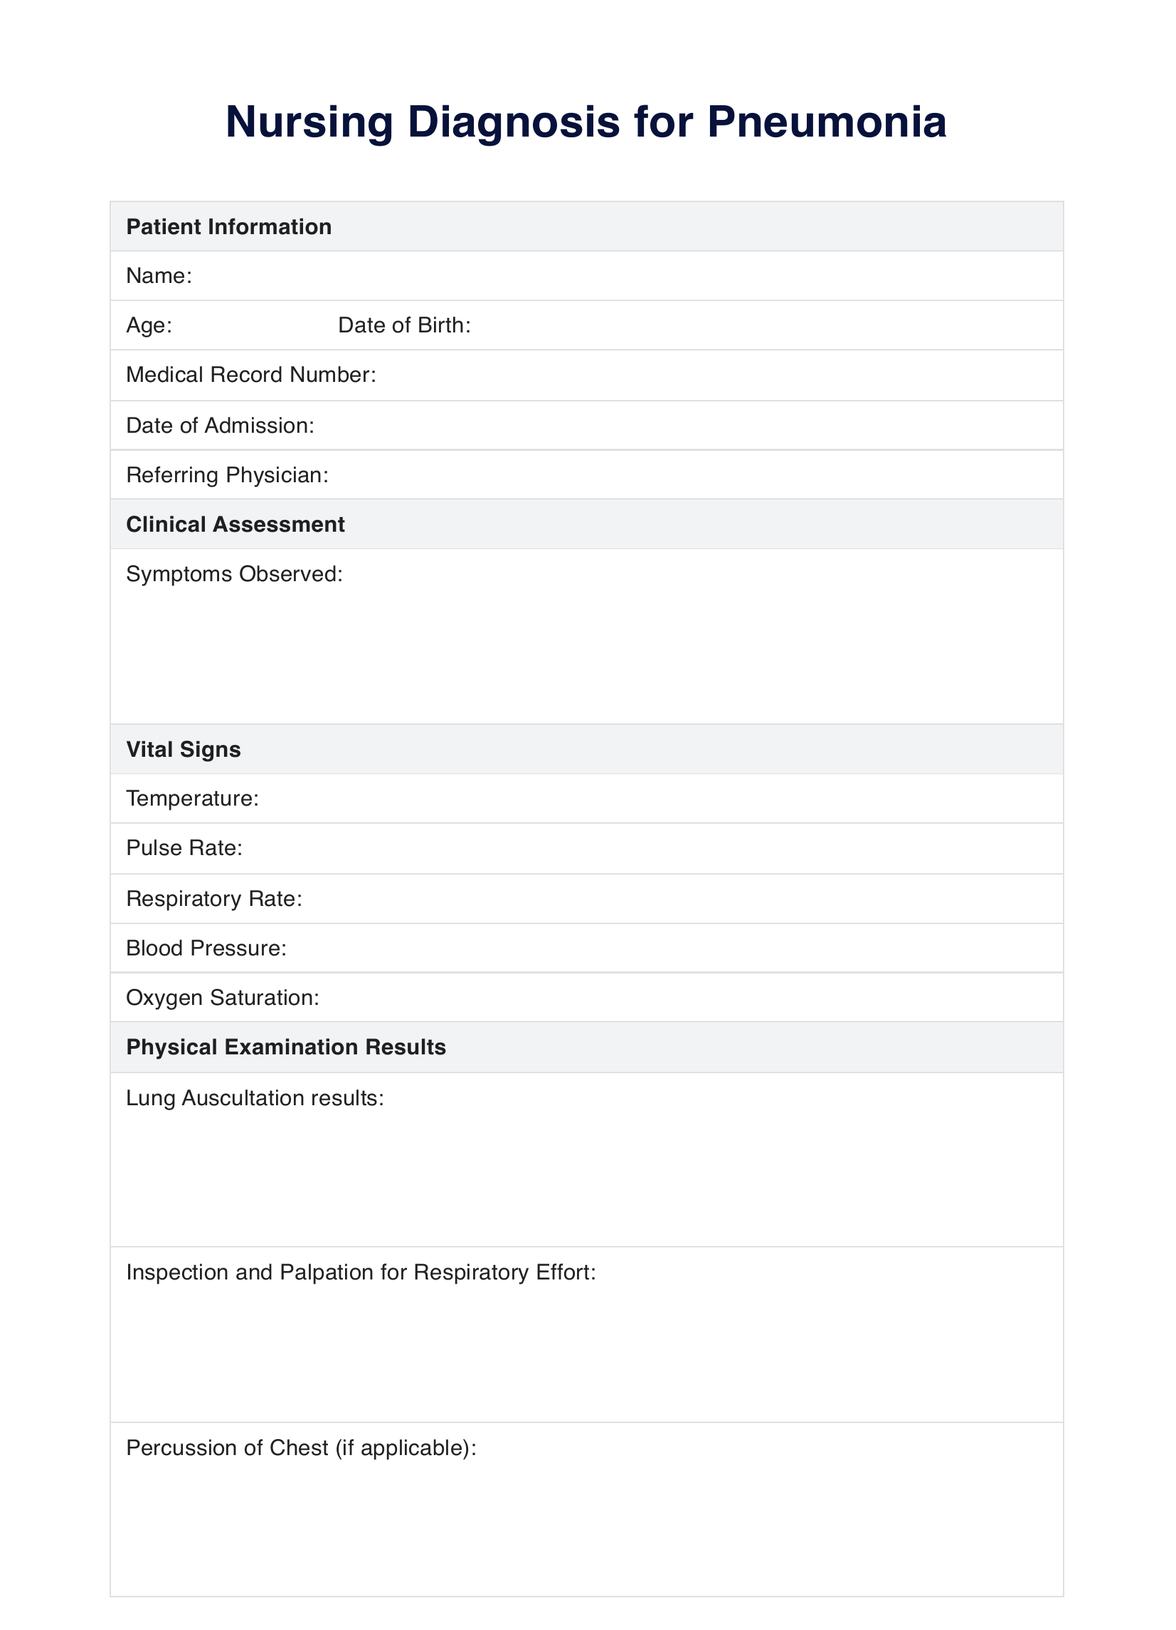 Nursing Diagnosis for Pneumonia PDF Example